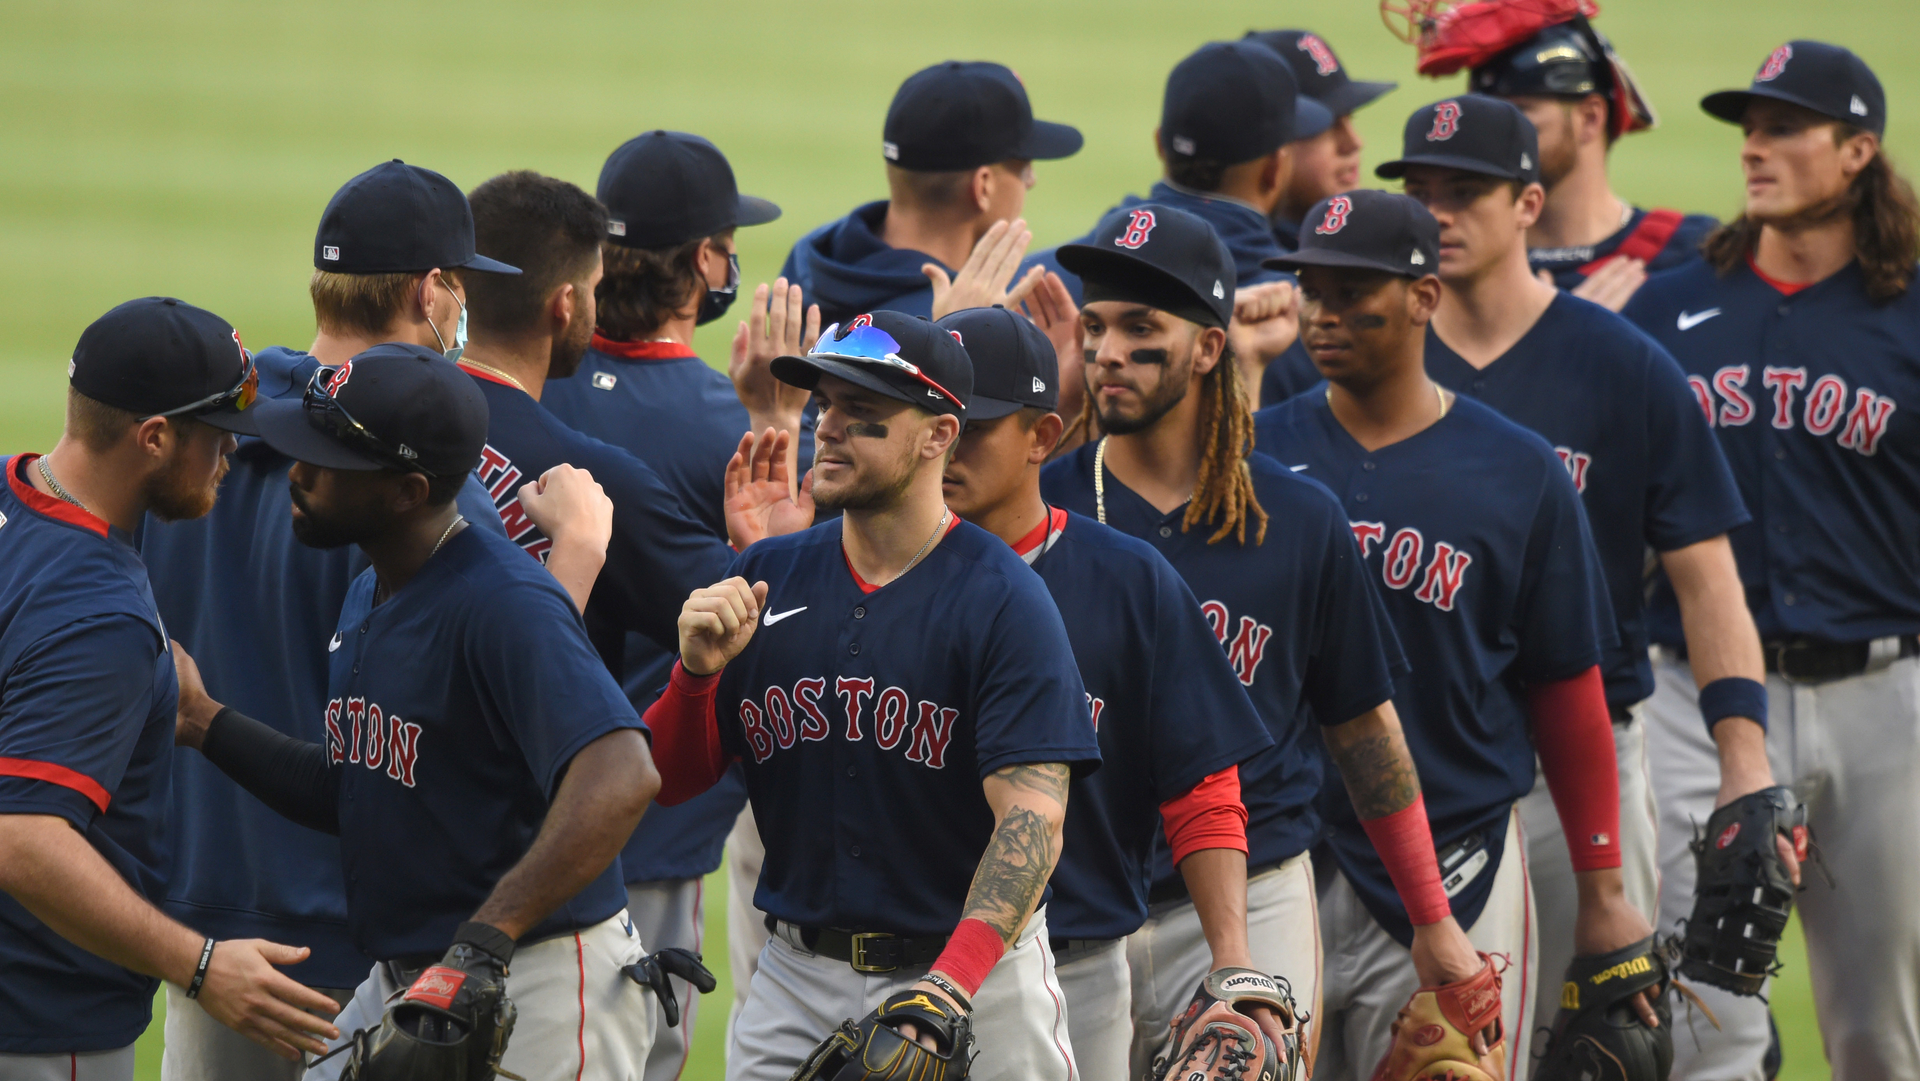 Jason Varitek's Red Sox future remains unclear